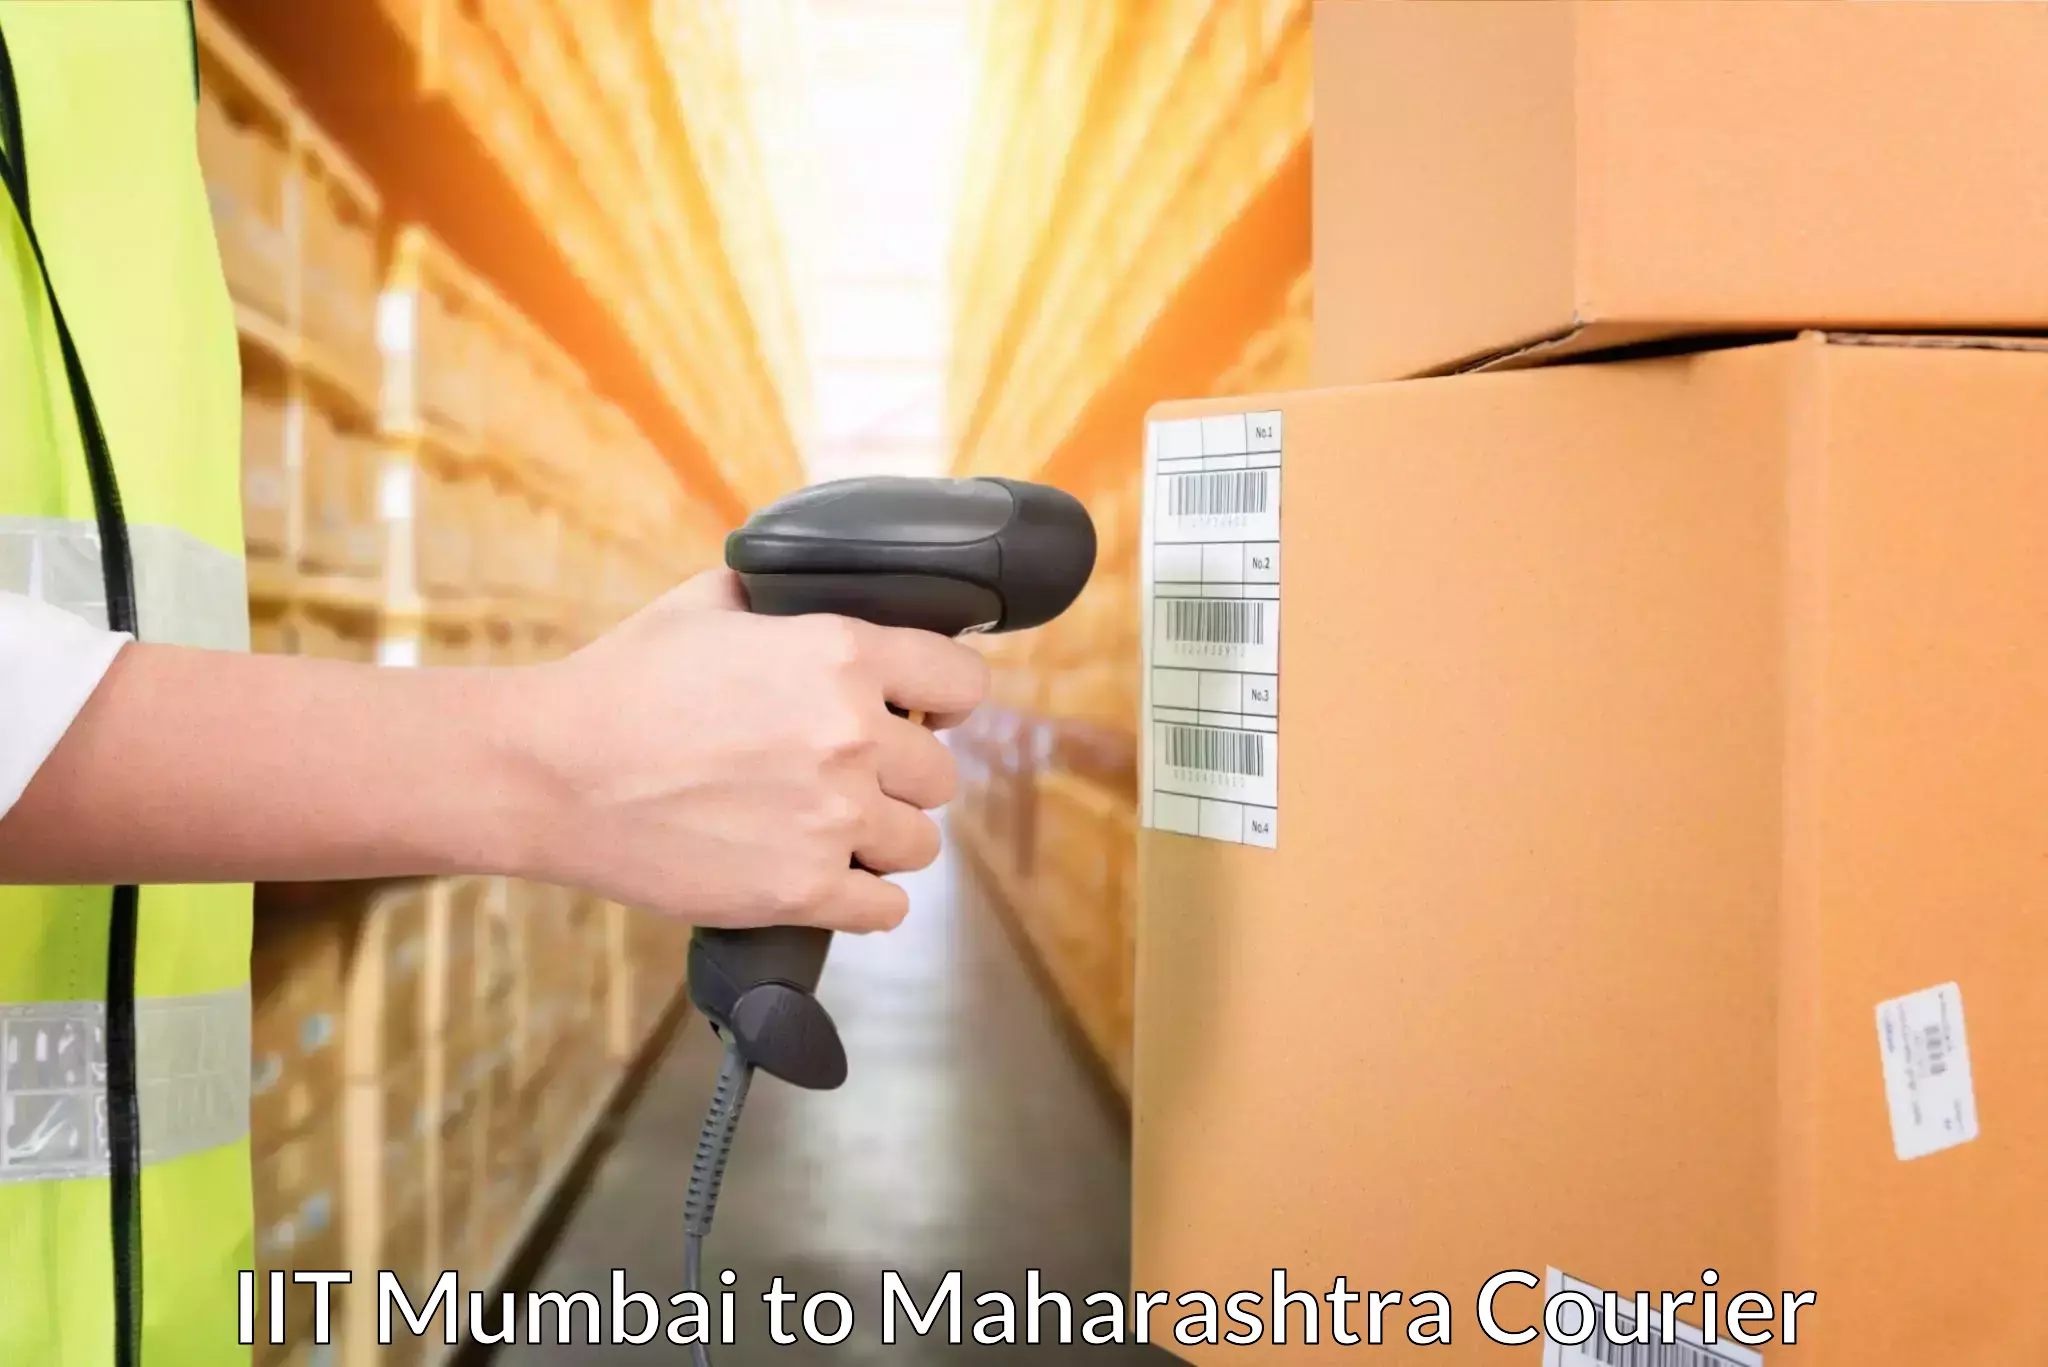 Cargo delivery service IIT Mumbai to Nagpur